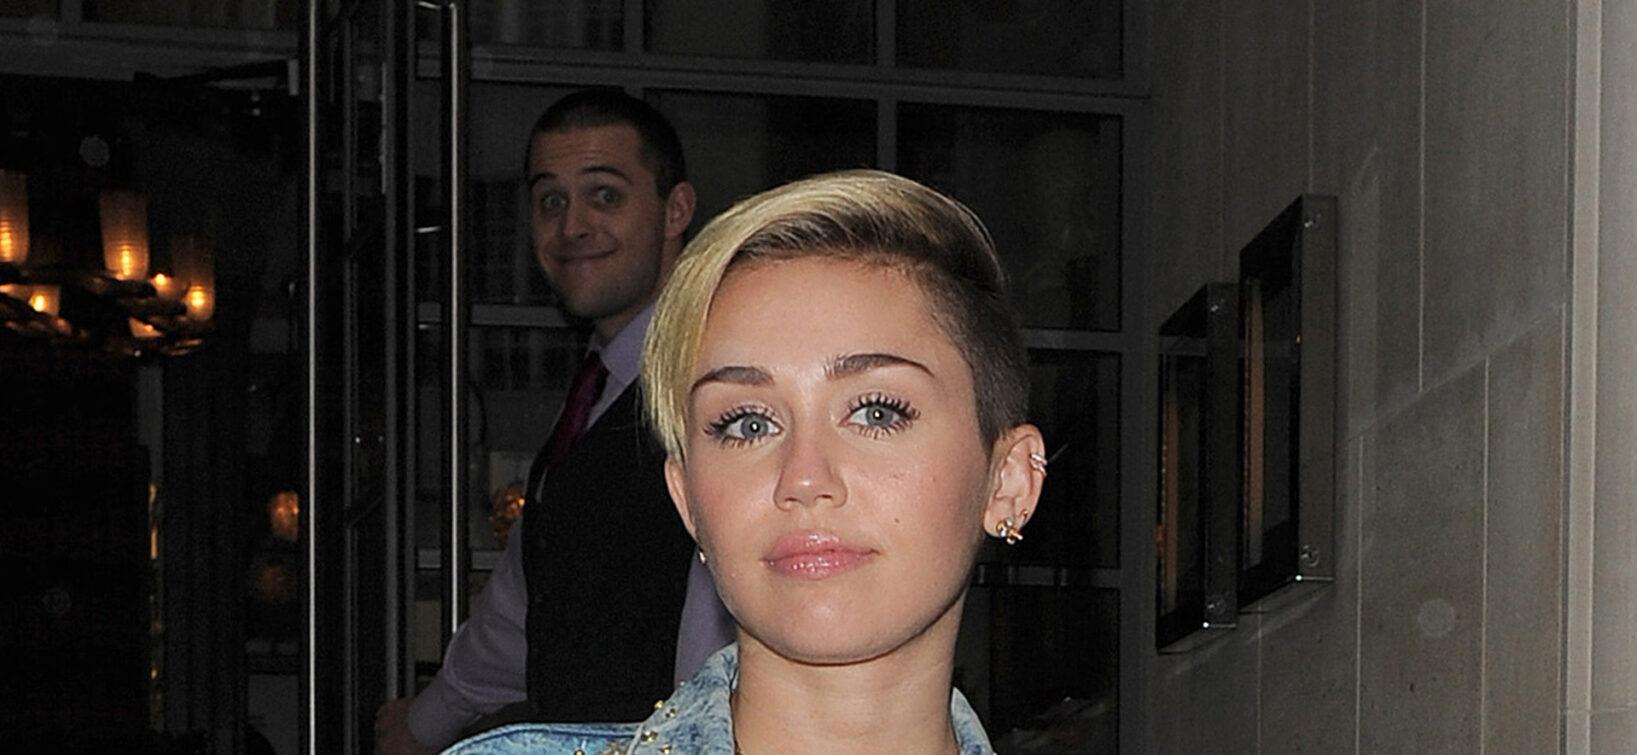 Miley Cyrus' Bangerz era hair cut